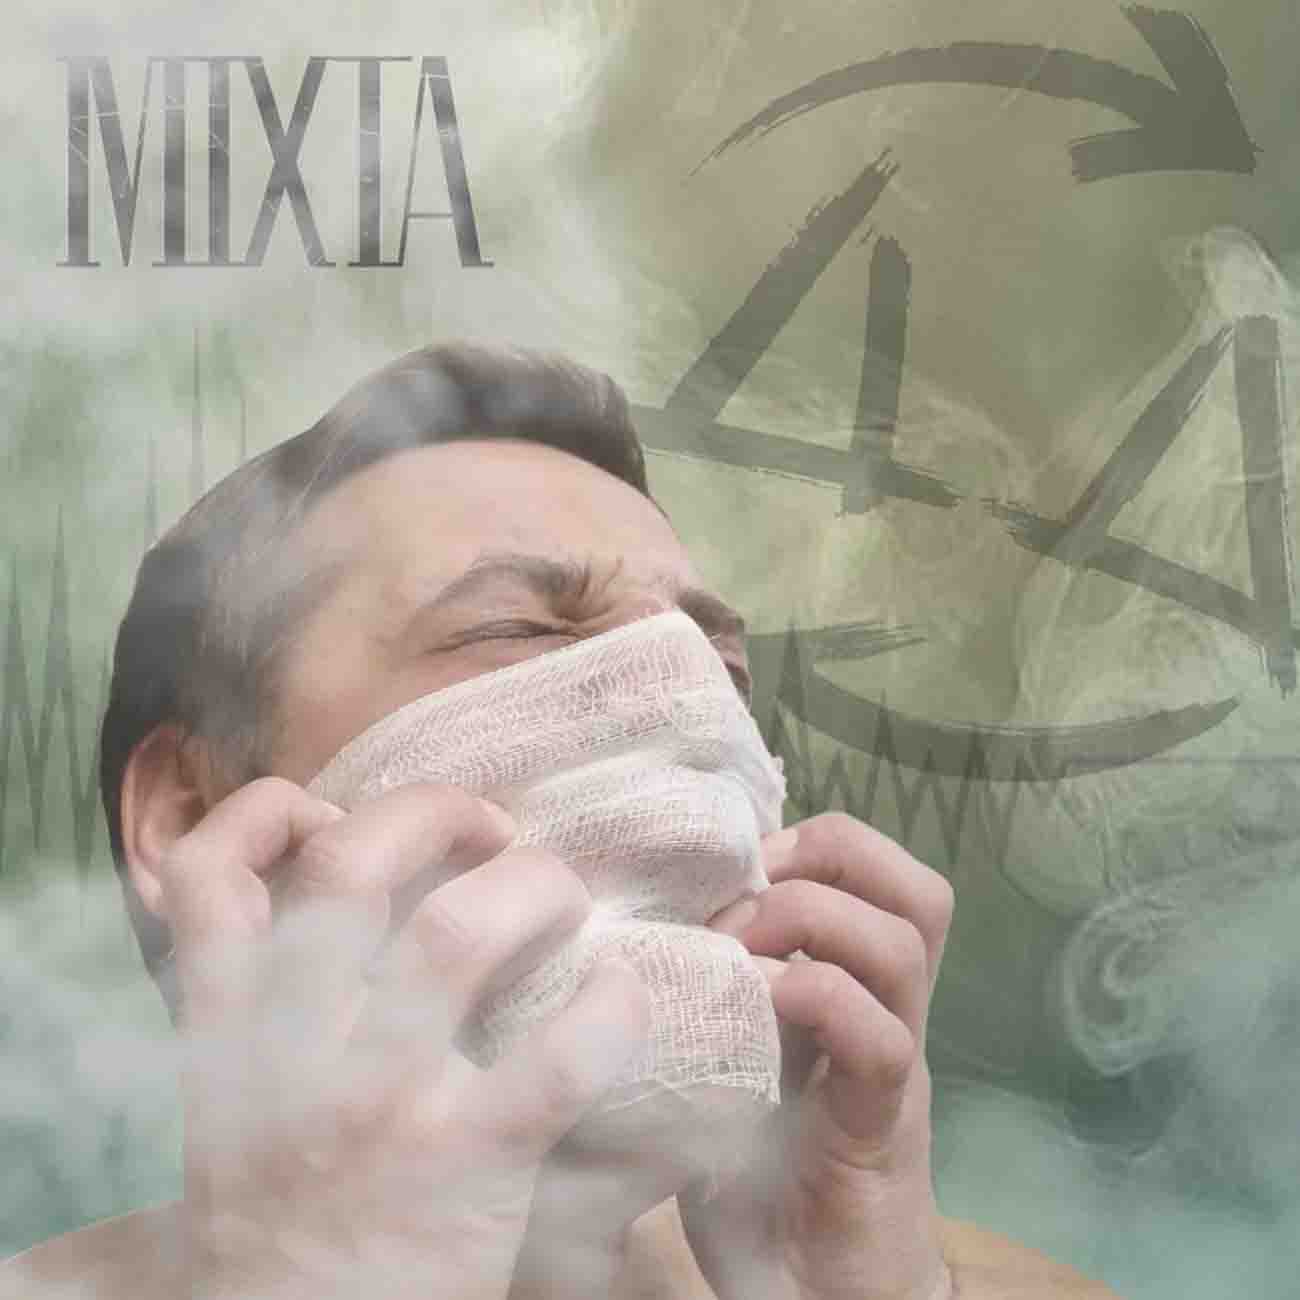 Mixta - Души Дыша